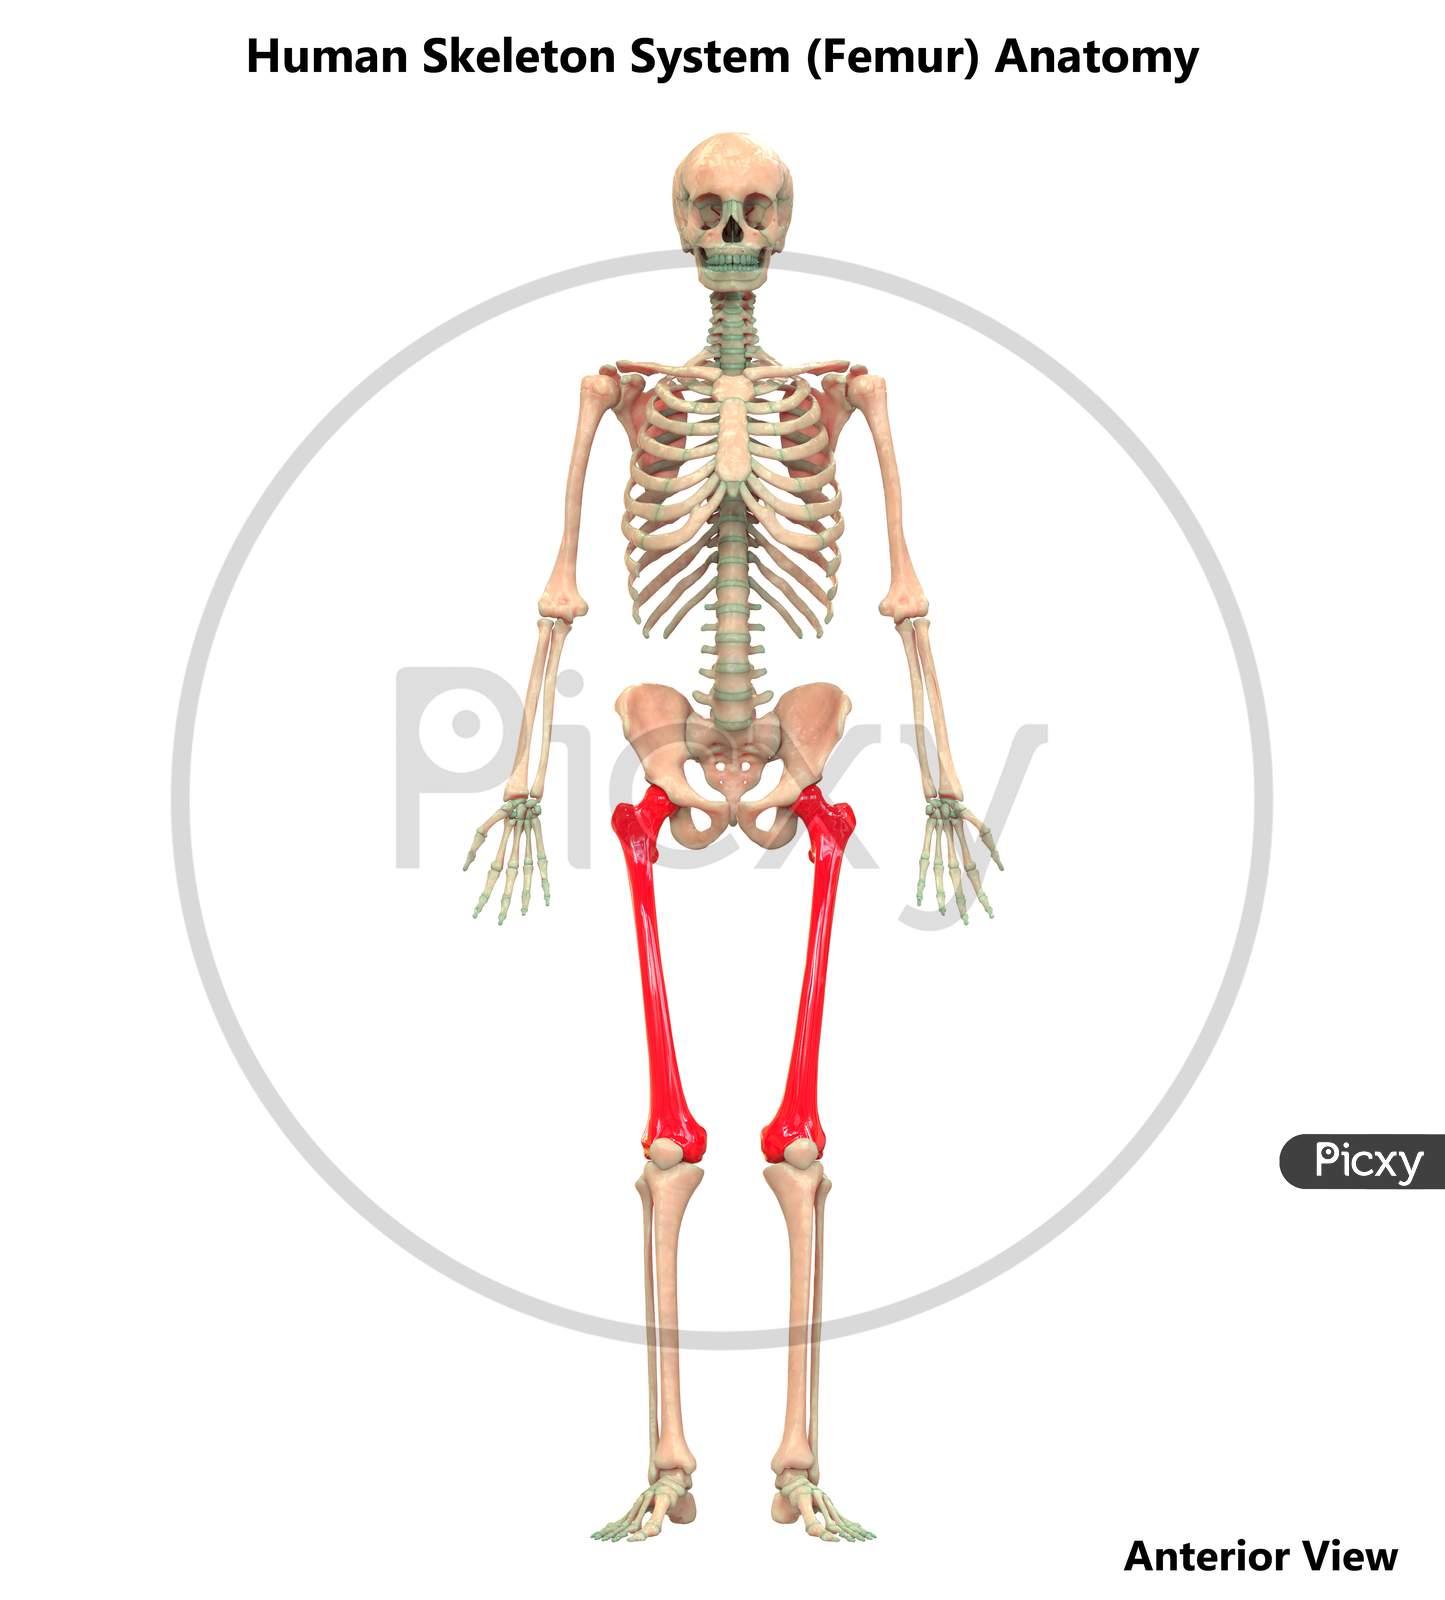 Human Skeleton System Anatomy (Femur)